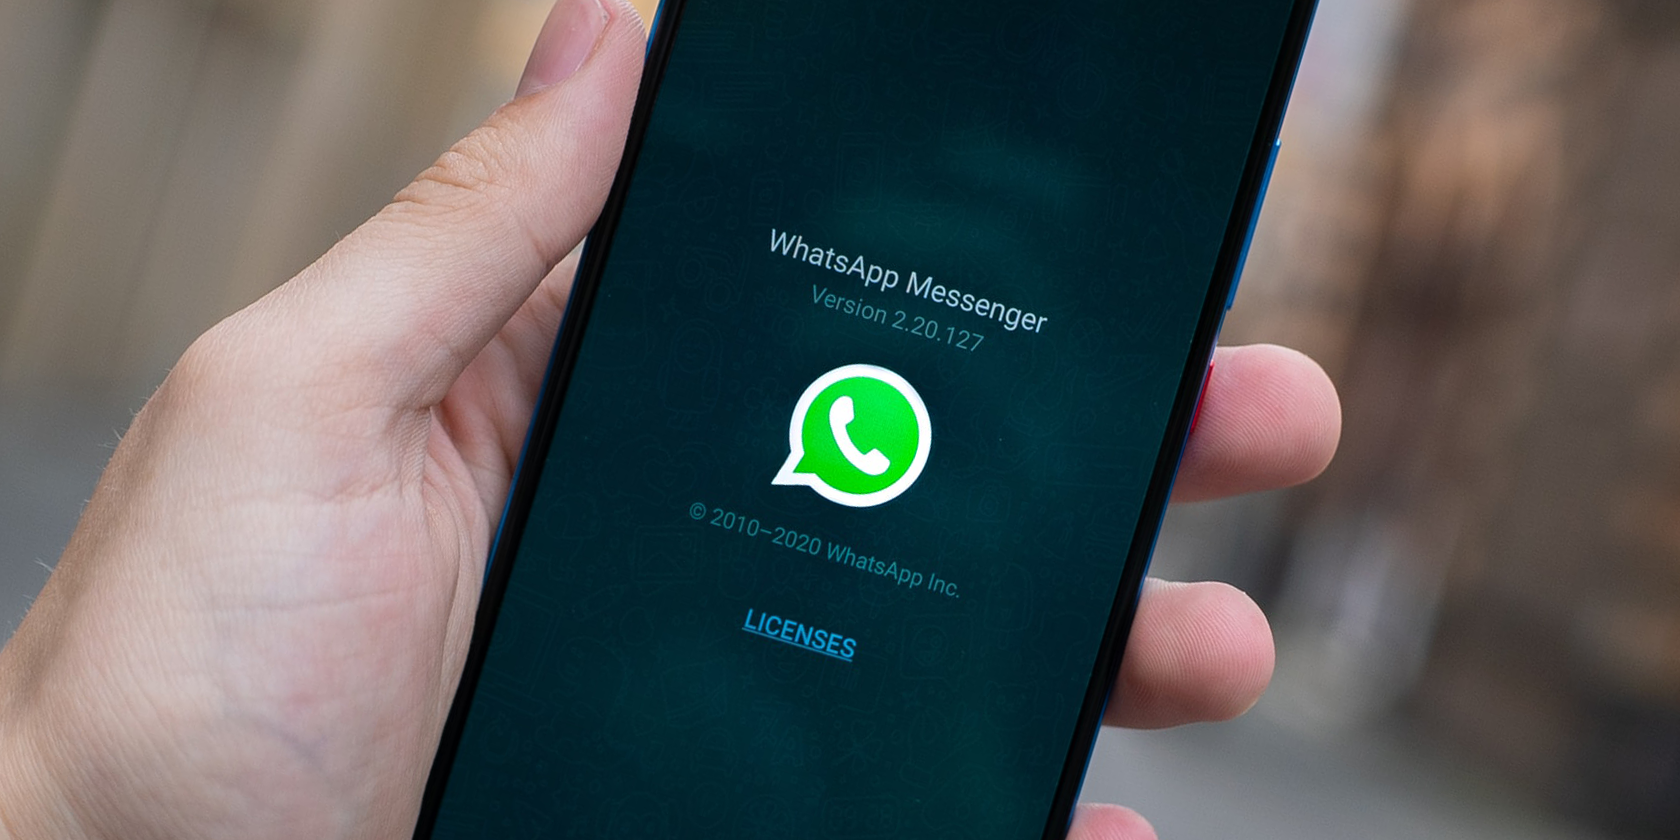 WhatsApp Messenger opening on mobile